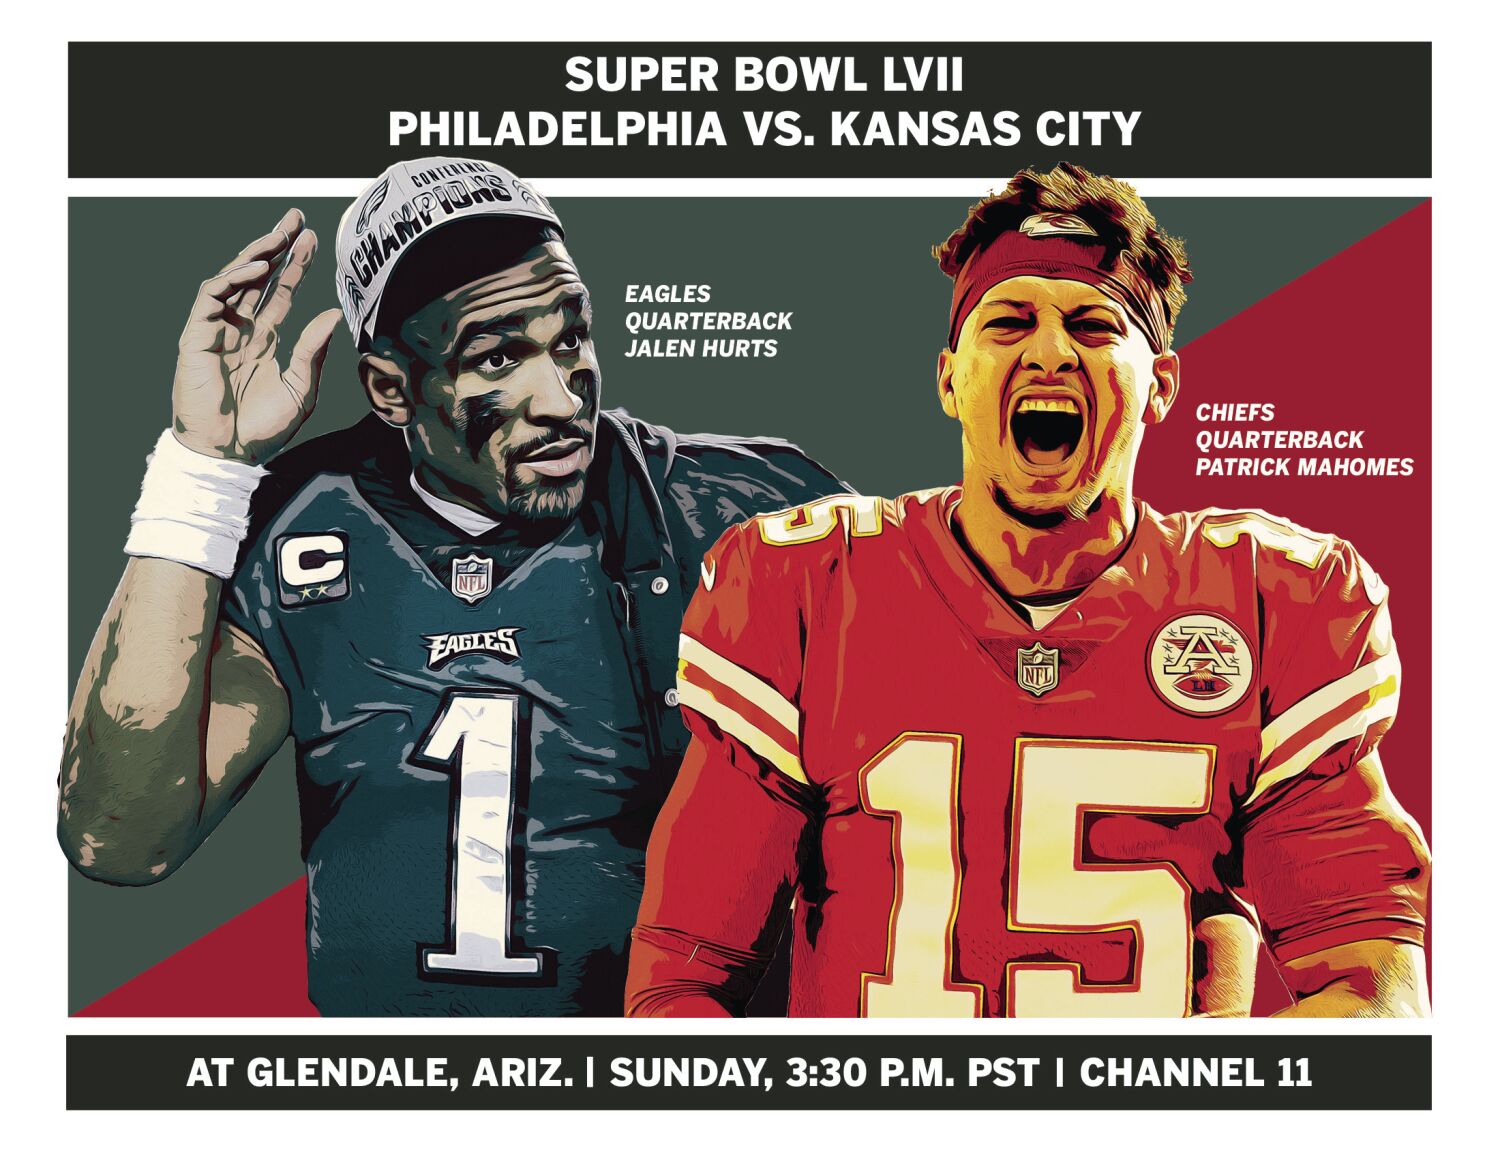 'A monumental moment': Jalen Hurts and Patrick Mahomes set to make Super Bowl history